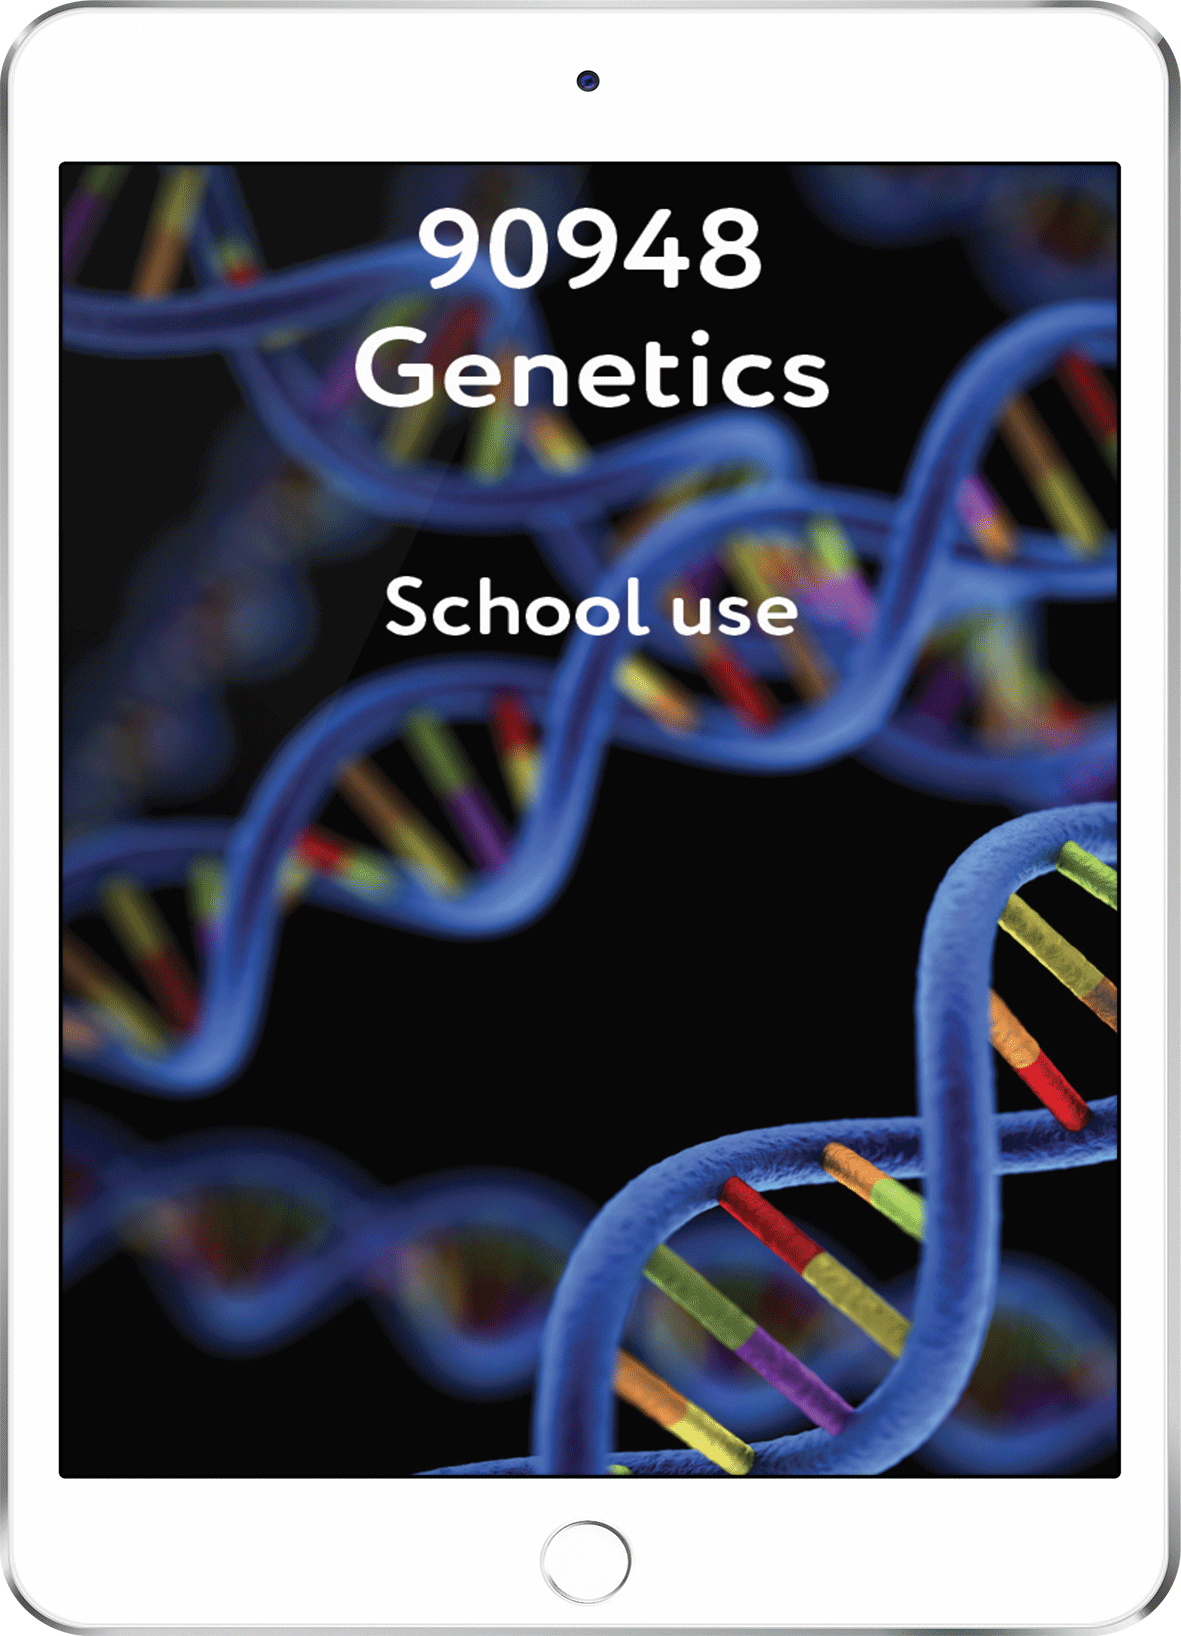 90948 Genetics - School Use